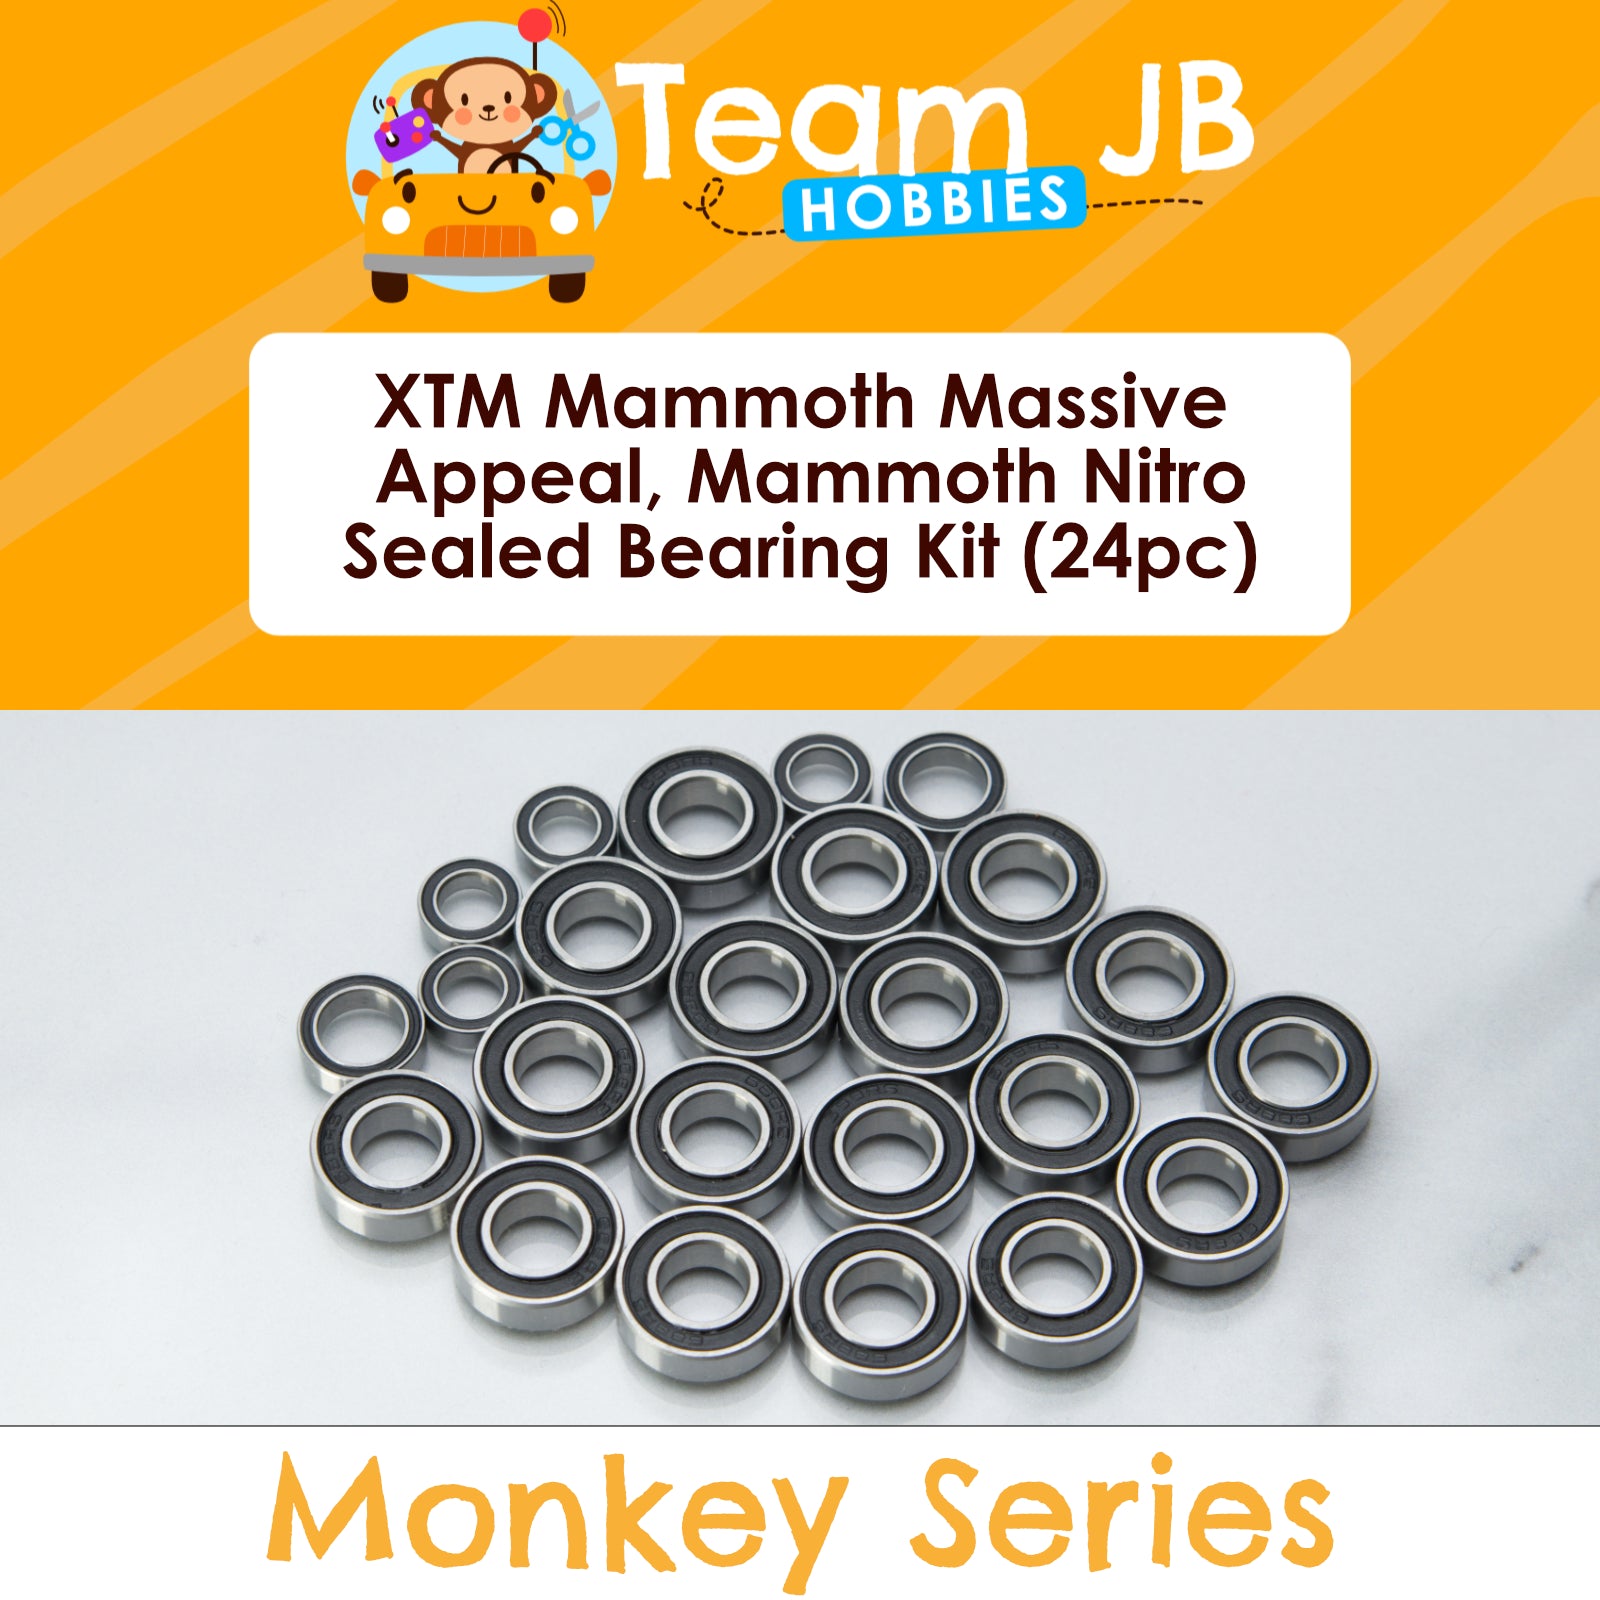 XTM Mammoth Massive Appeal, Mammoth Nitro - Sealed Bearing Kit